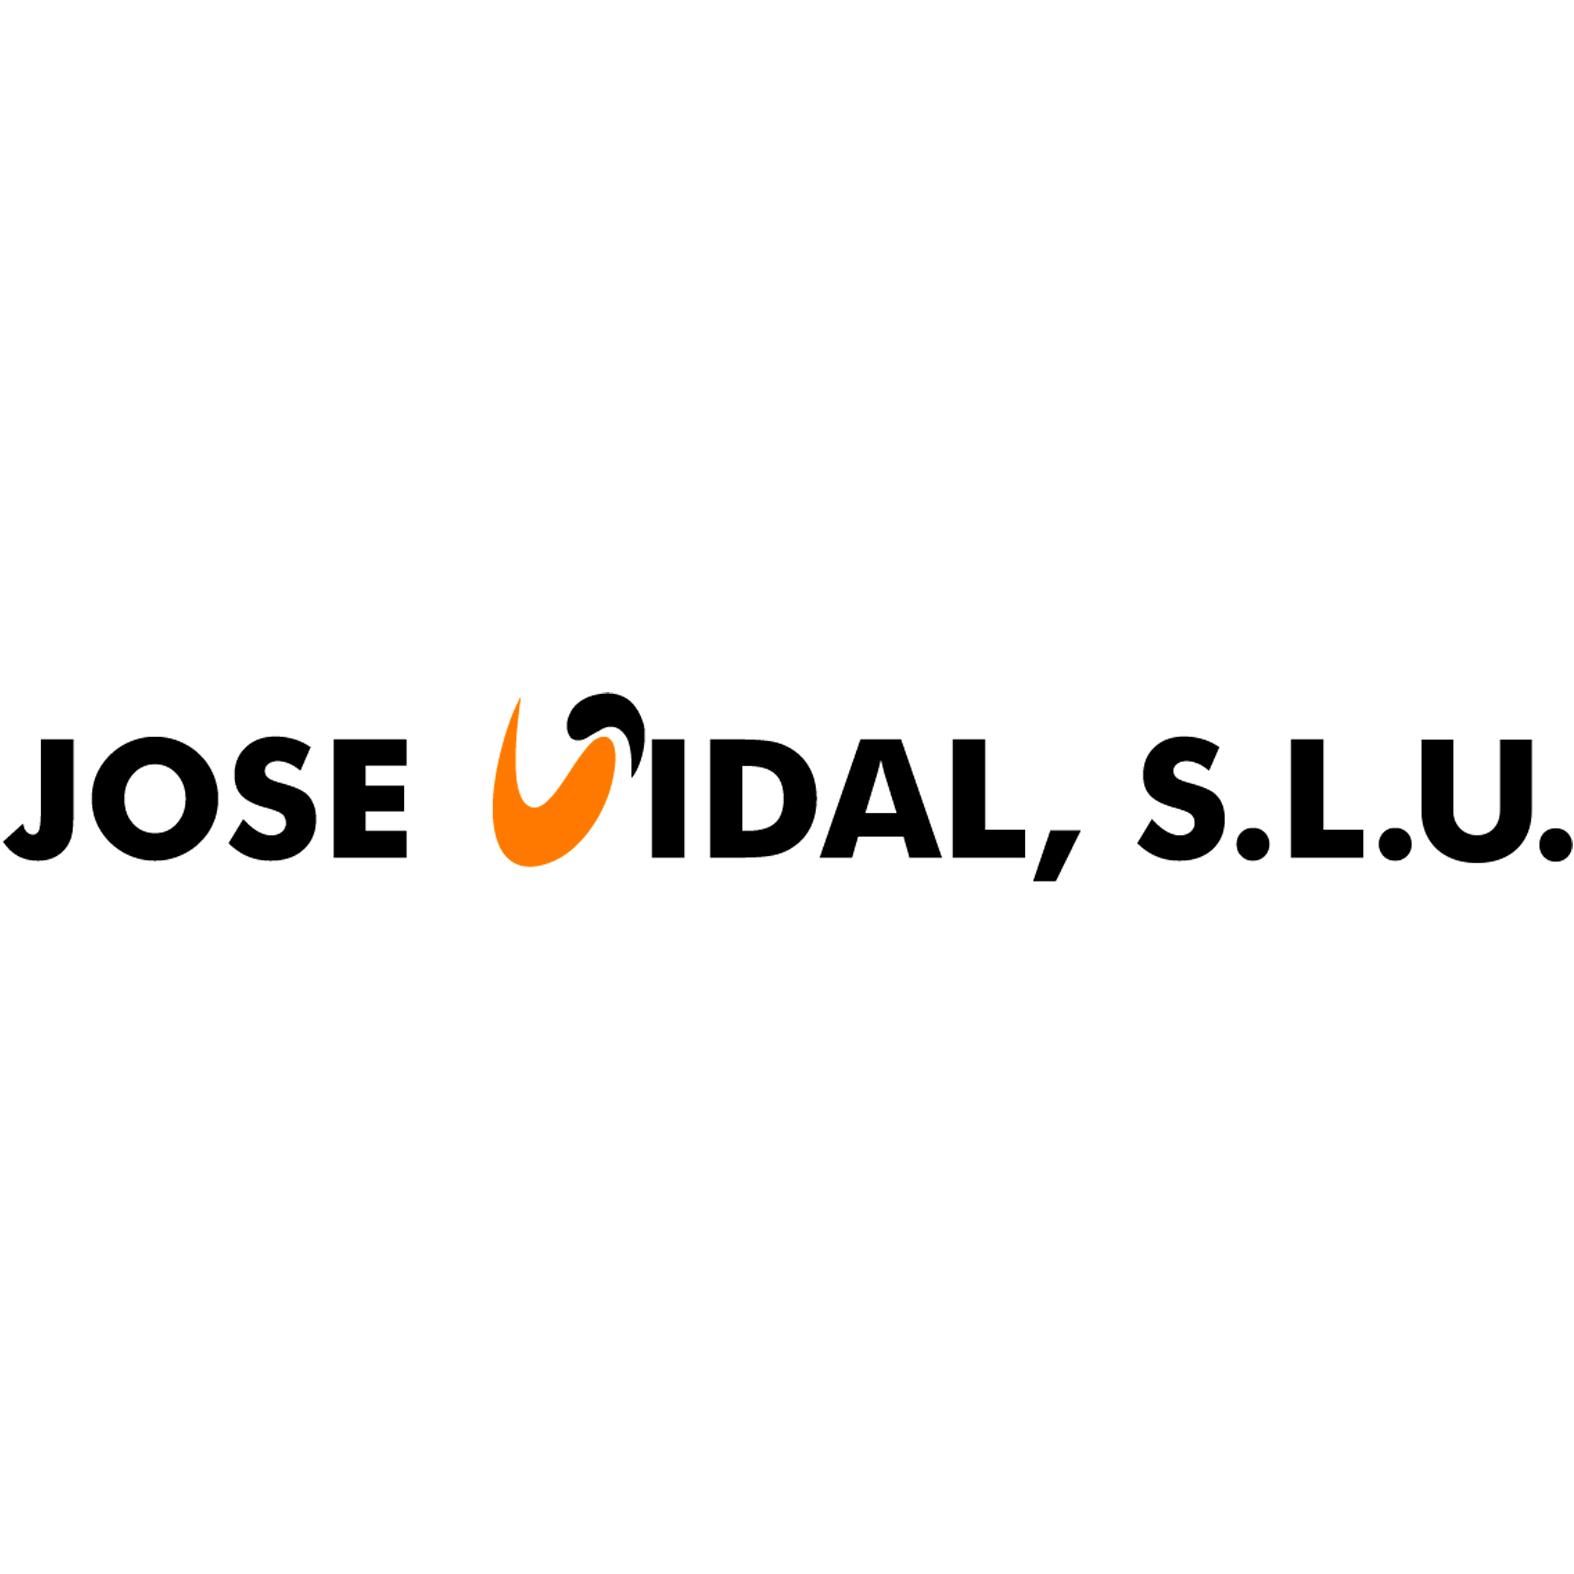 JOSE VIDAL, S.L.U.